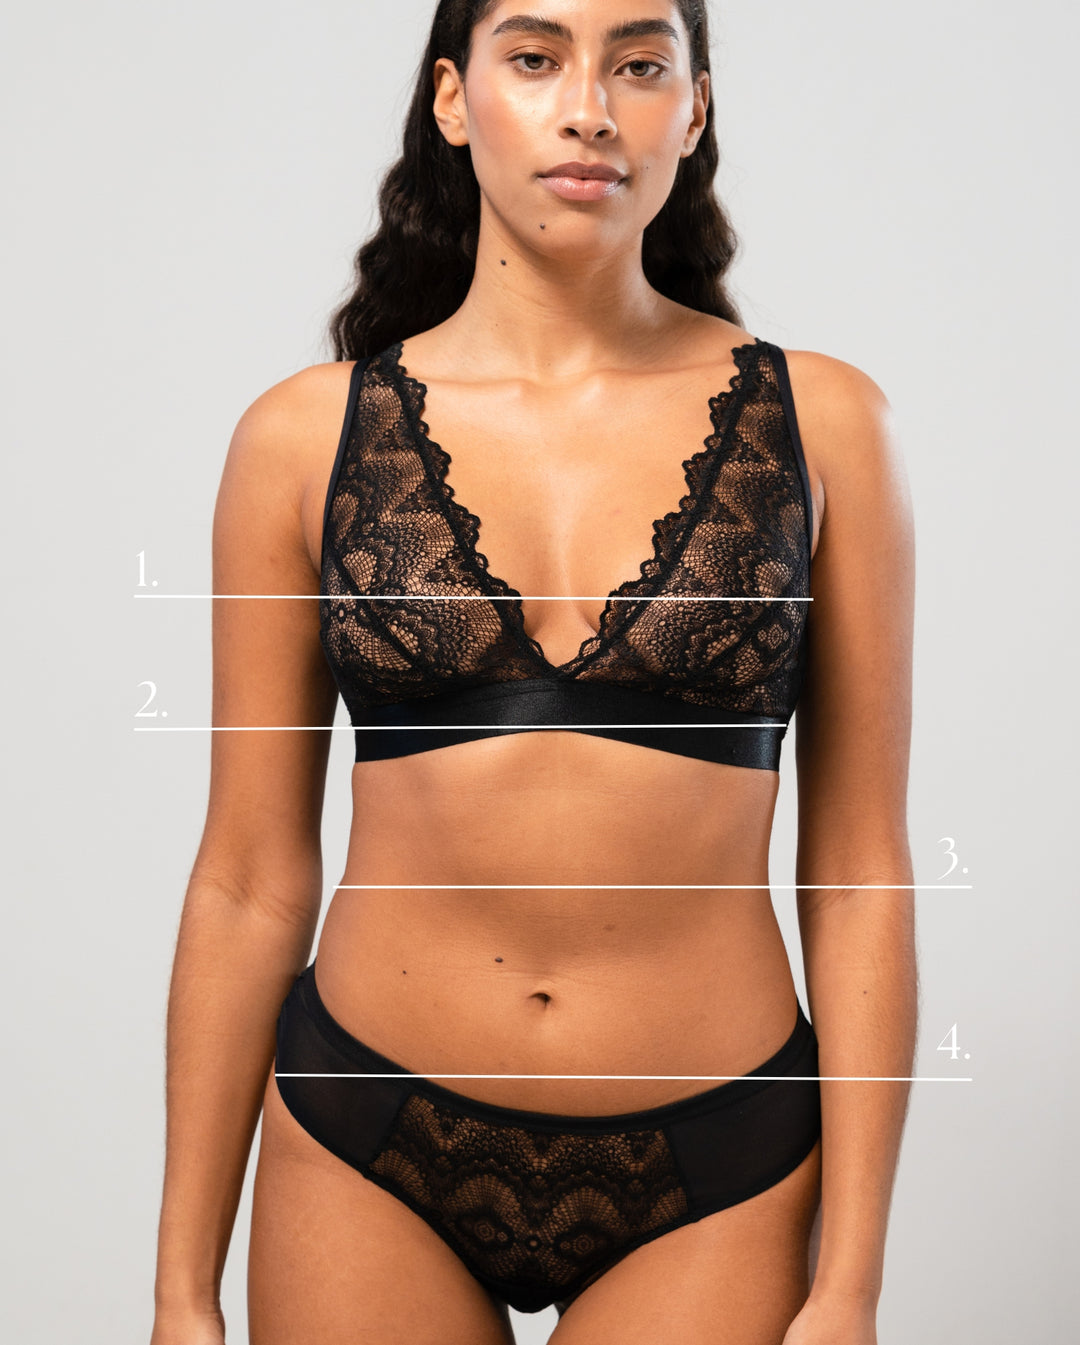 Wholesale 38 c bra size For Supportive Underwear 